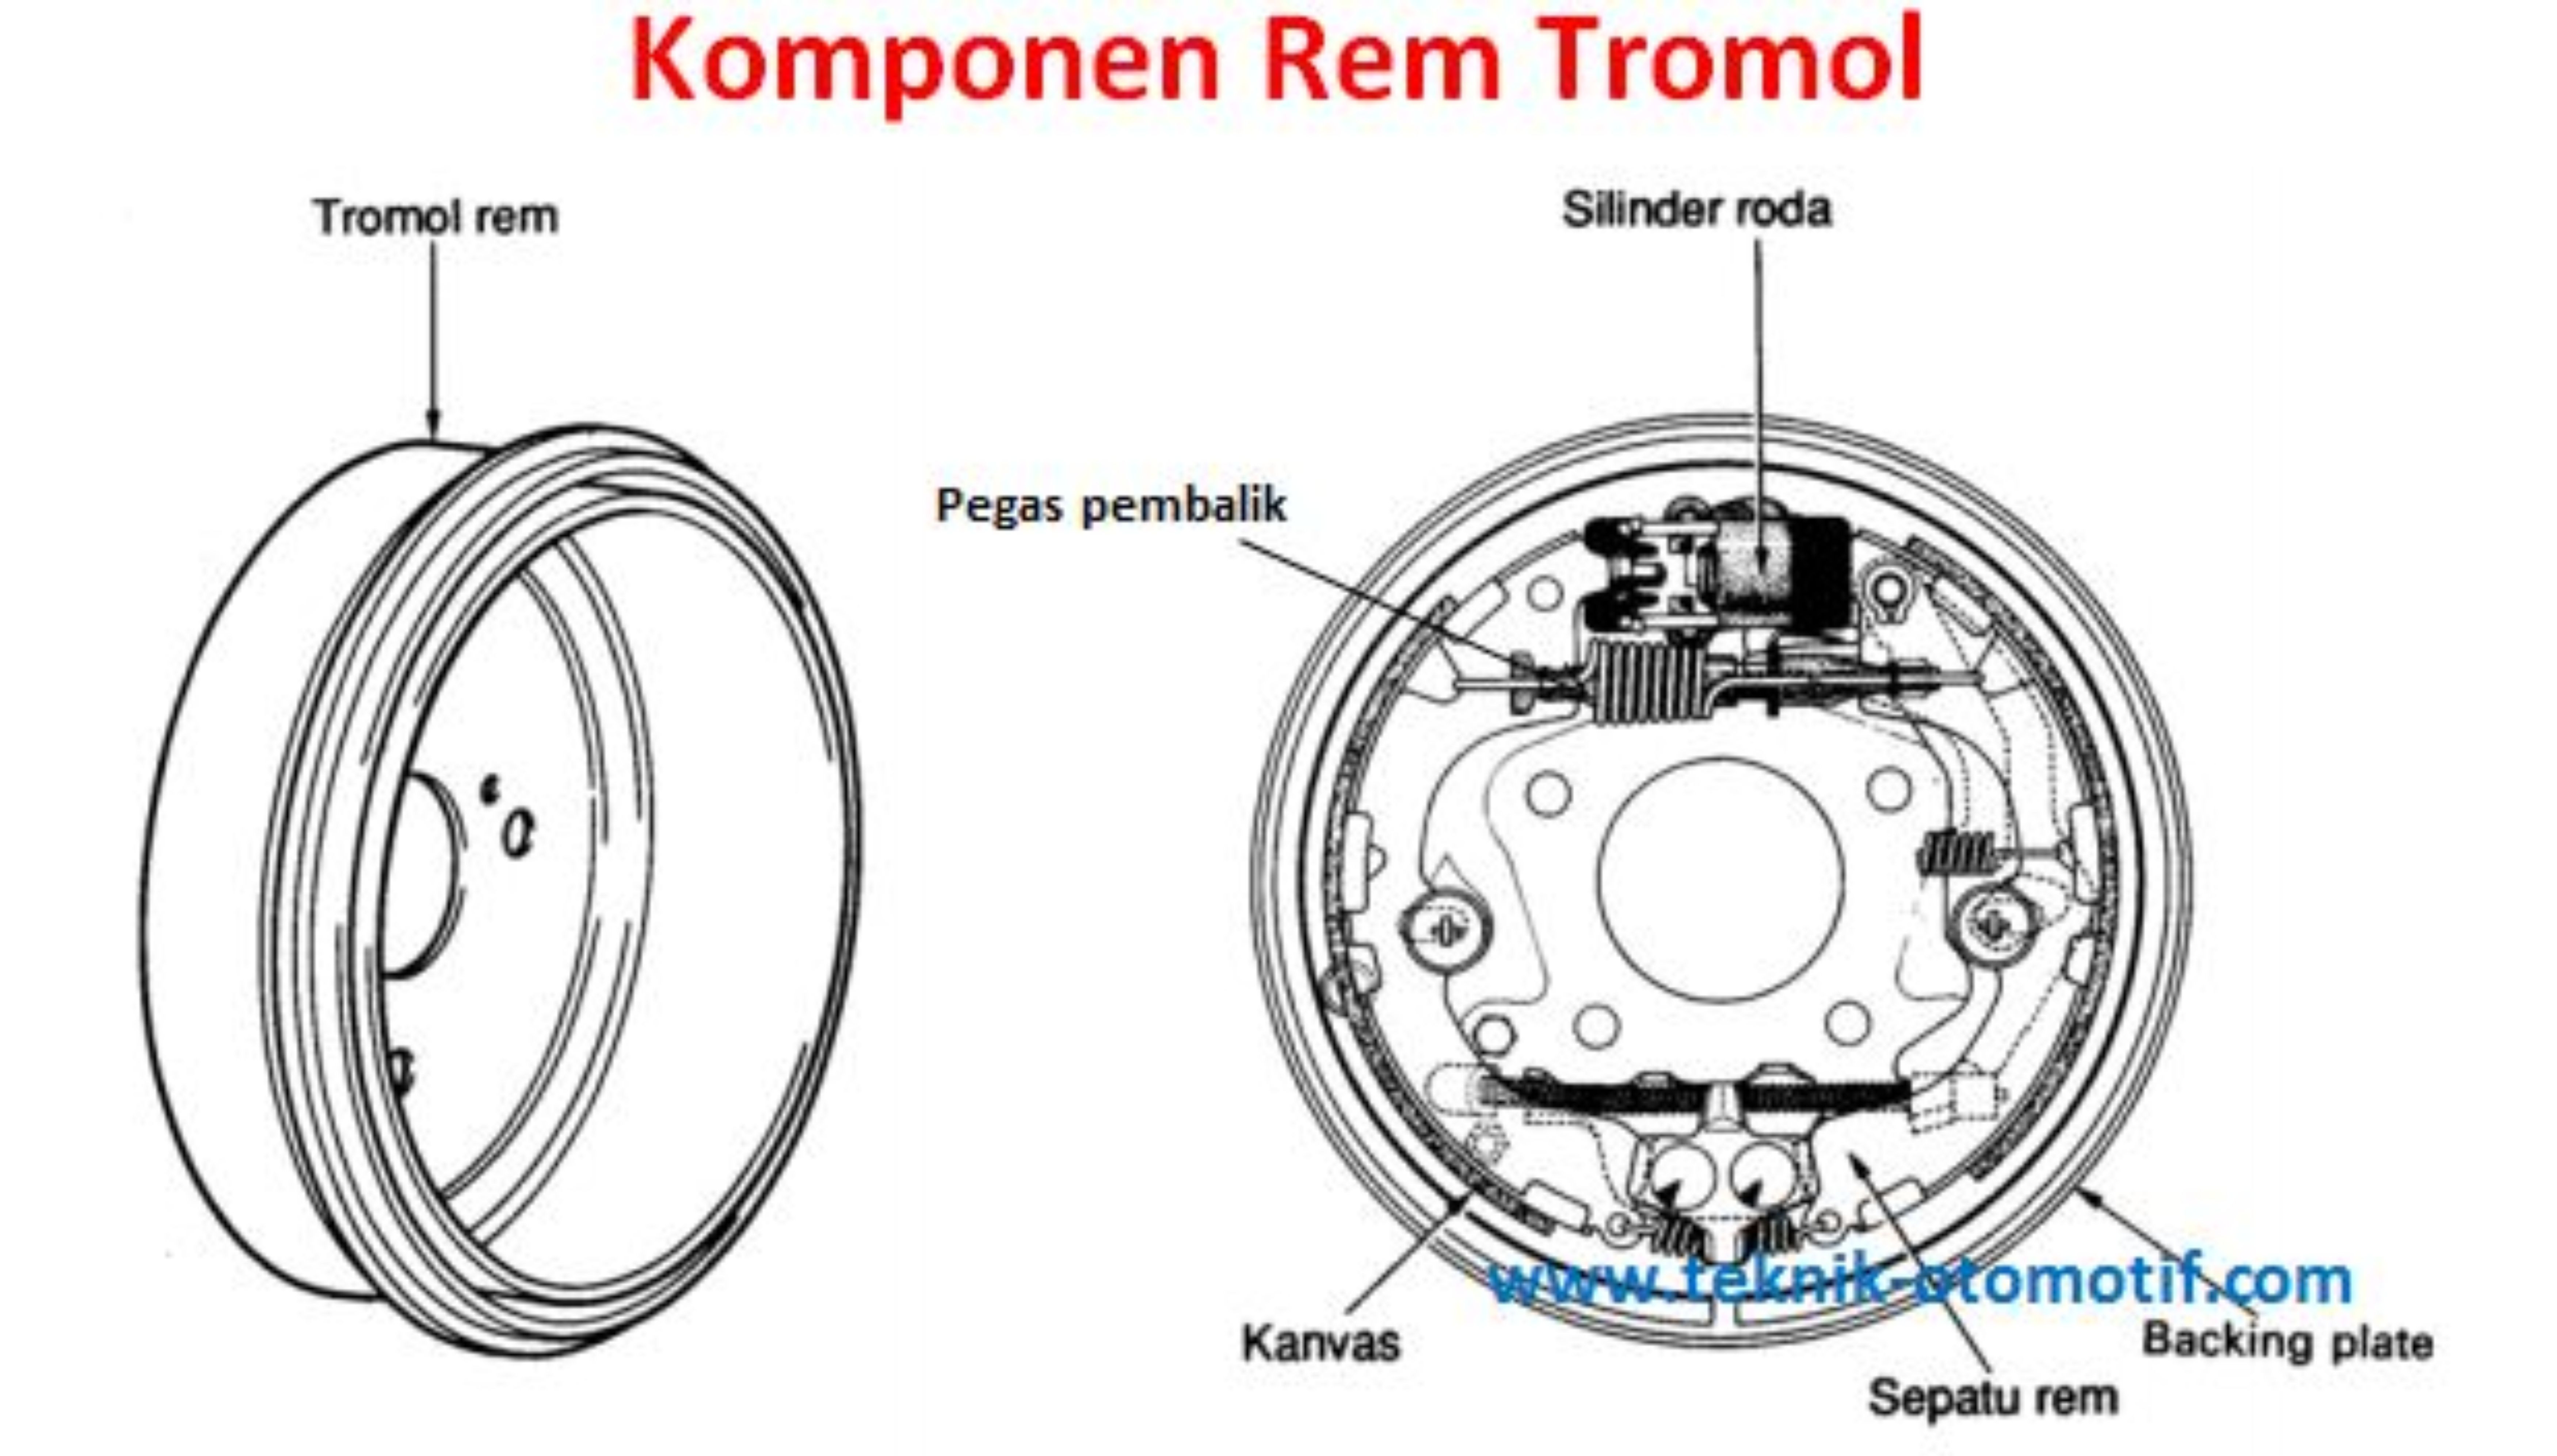 Komponen Rem Tromol